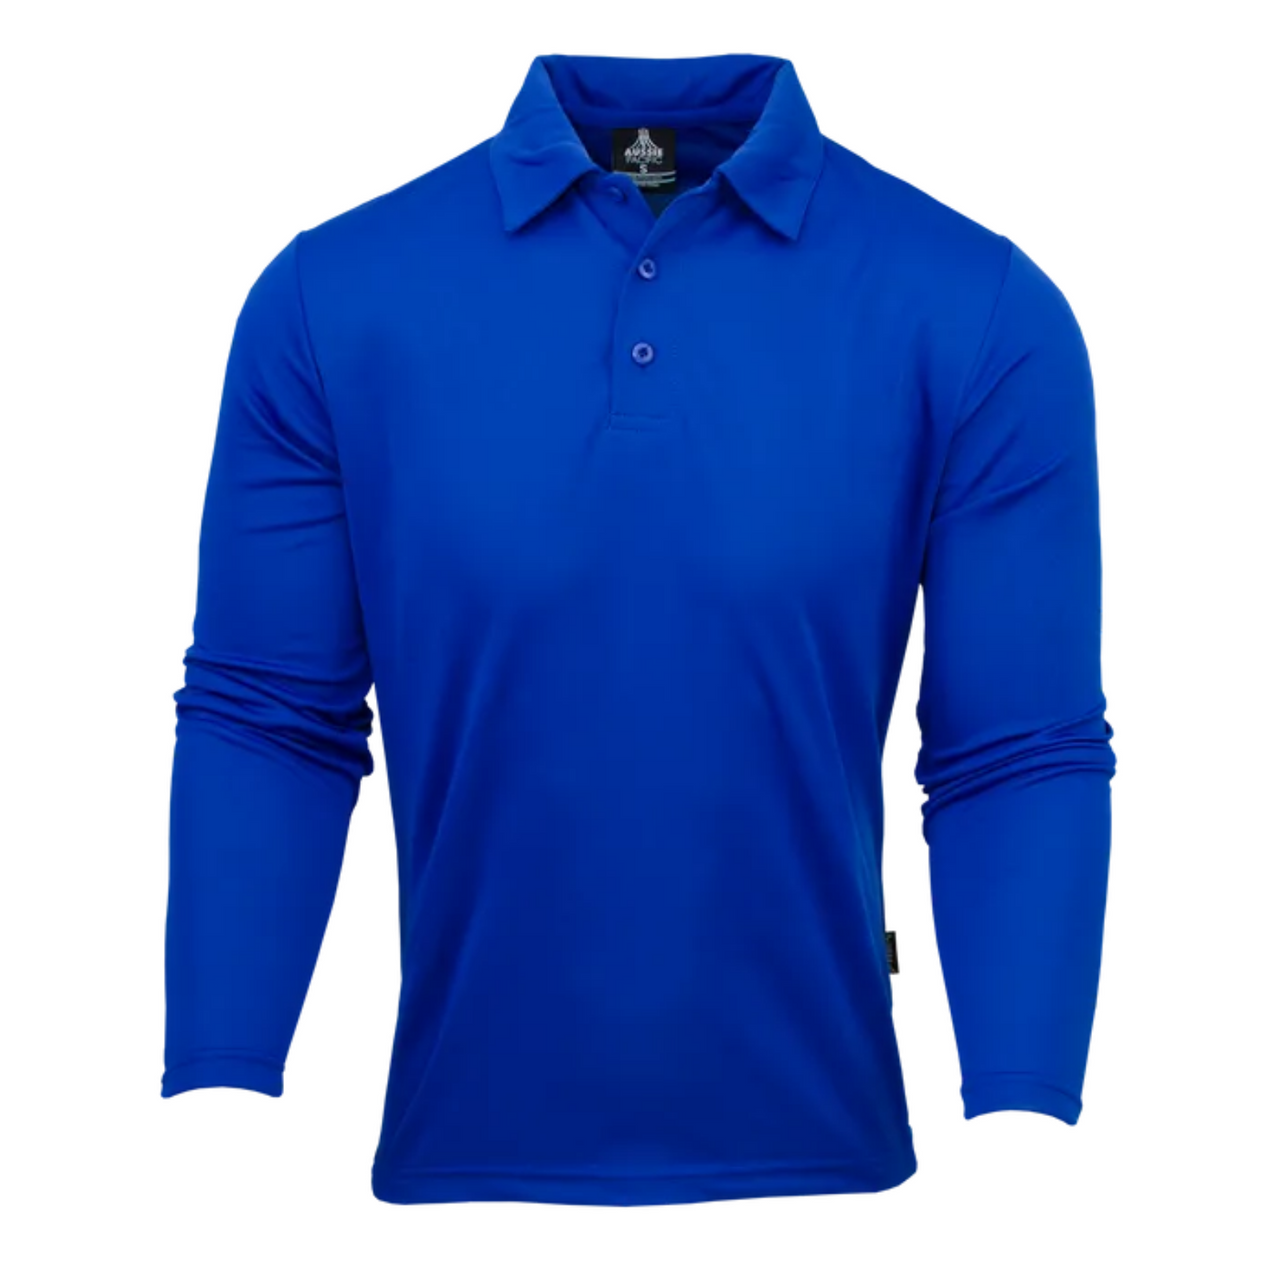 Mens DriWear Easy Care Long Sleeve Polo Shirt | Shop Plain Polos Online